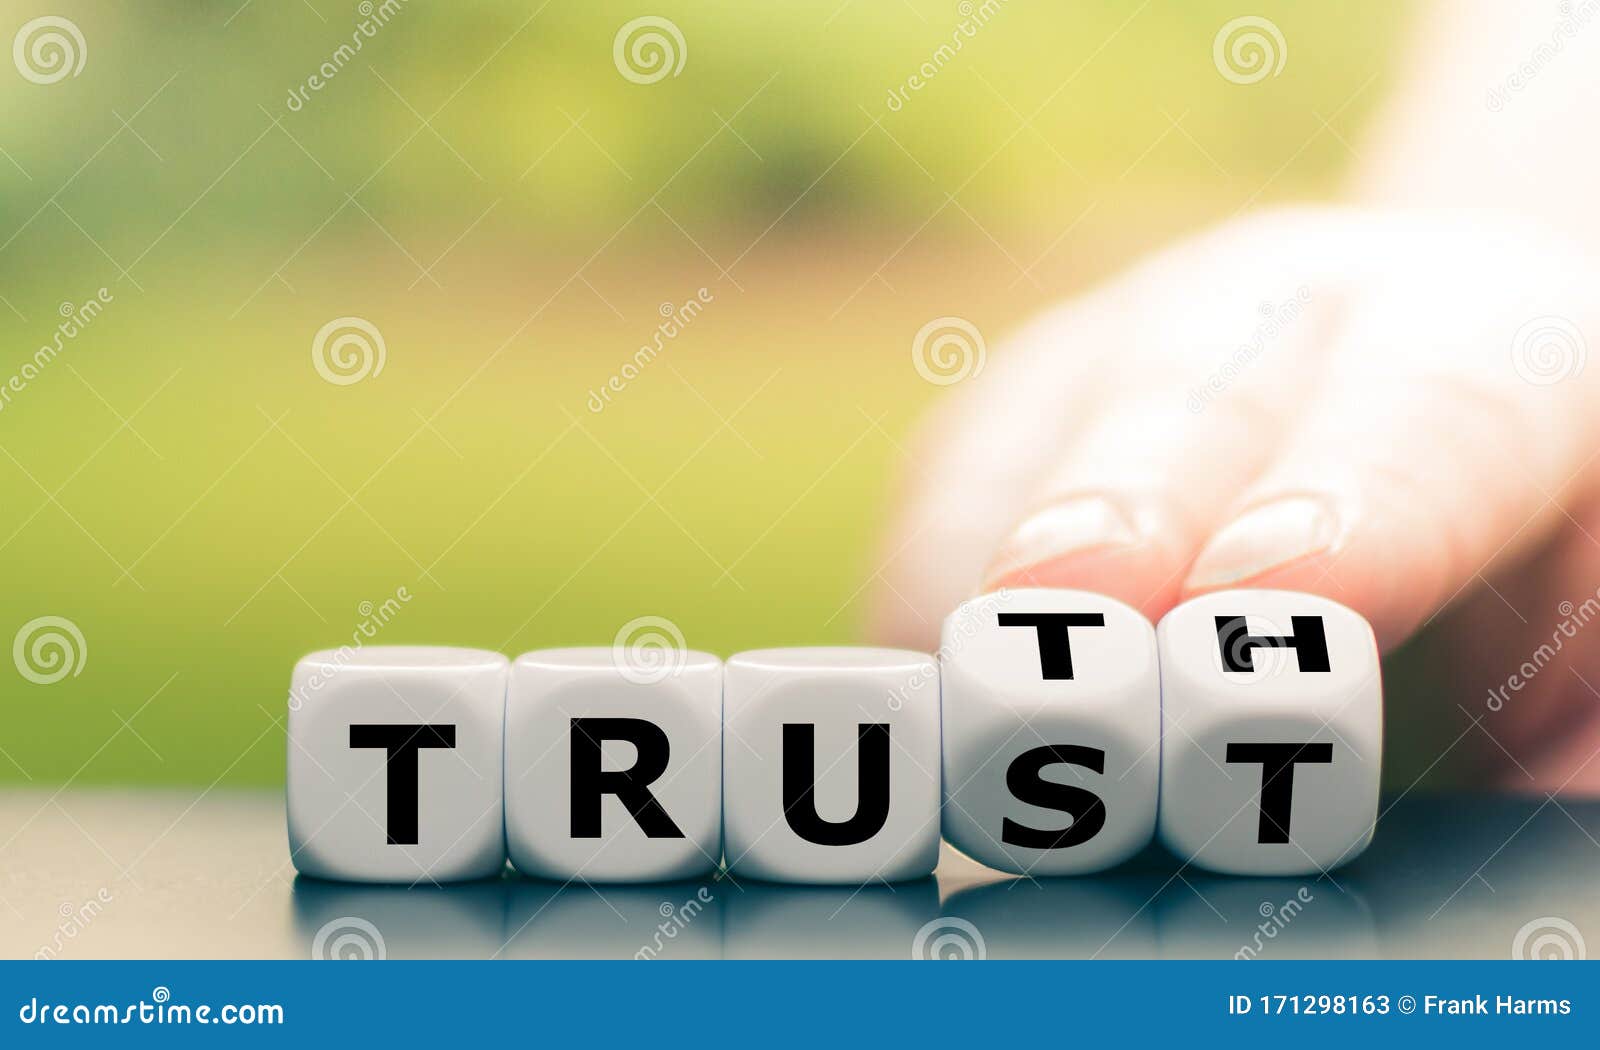 truth instead of trust.